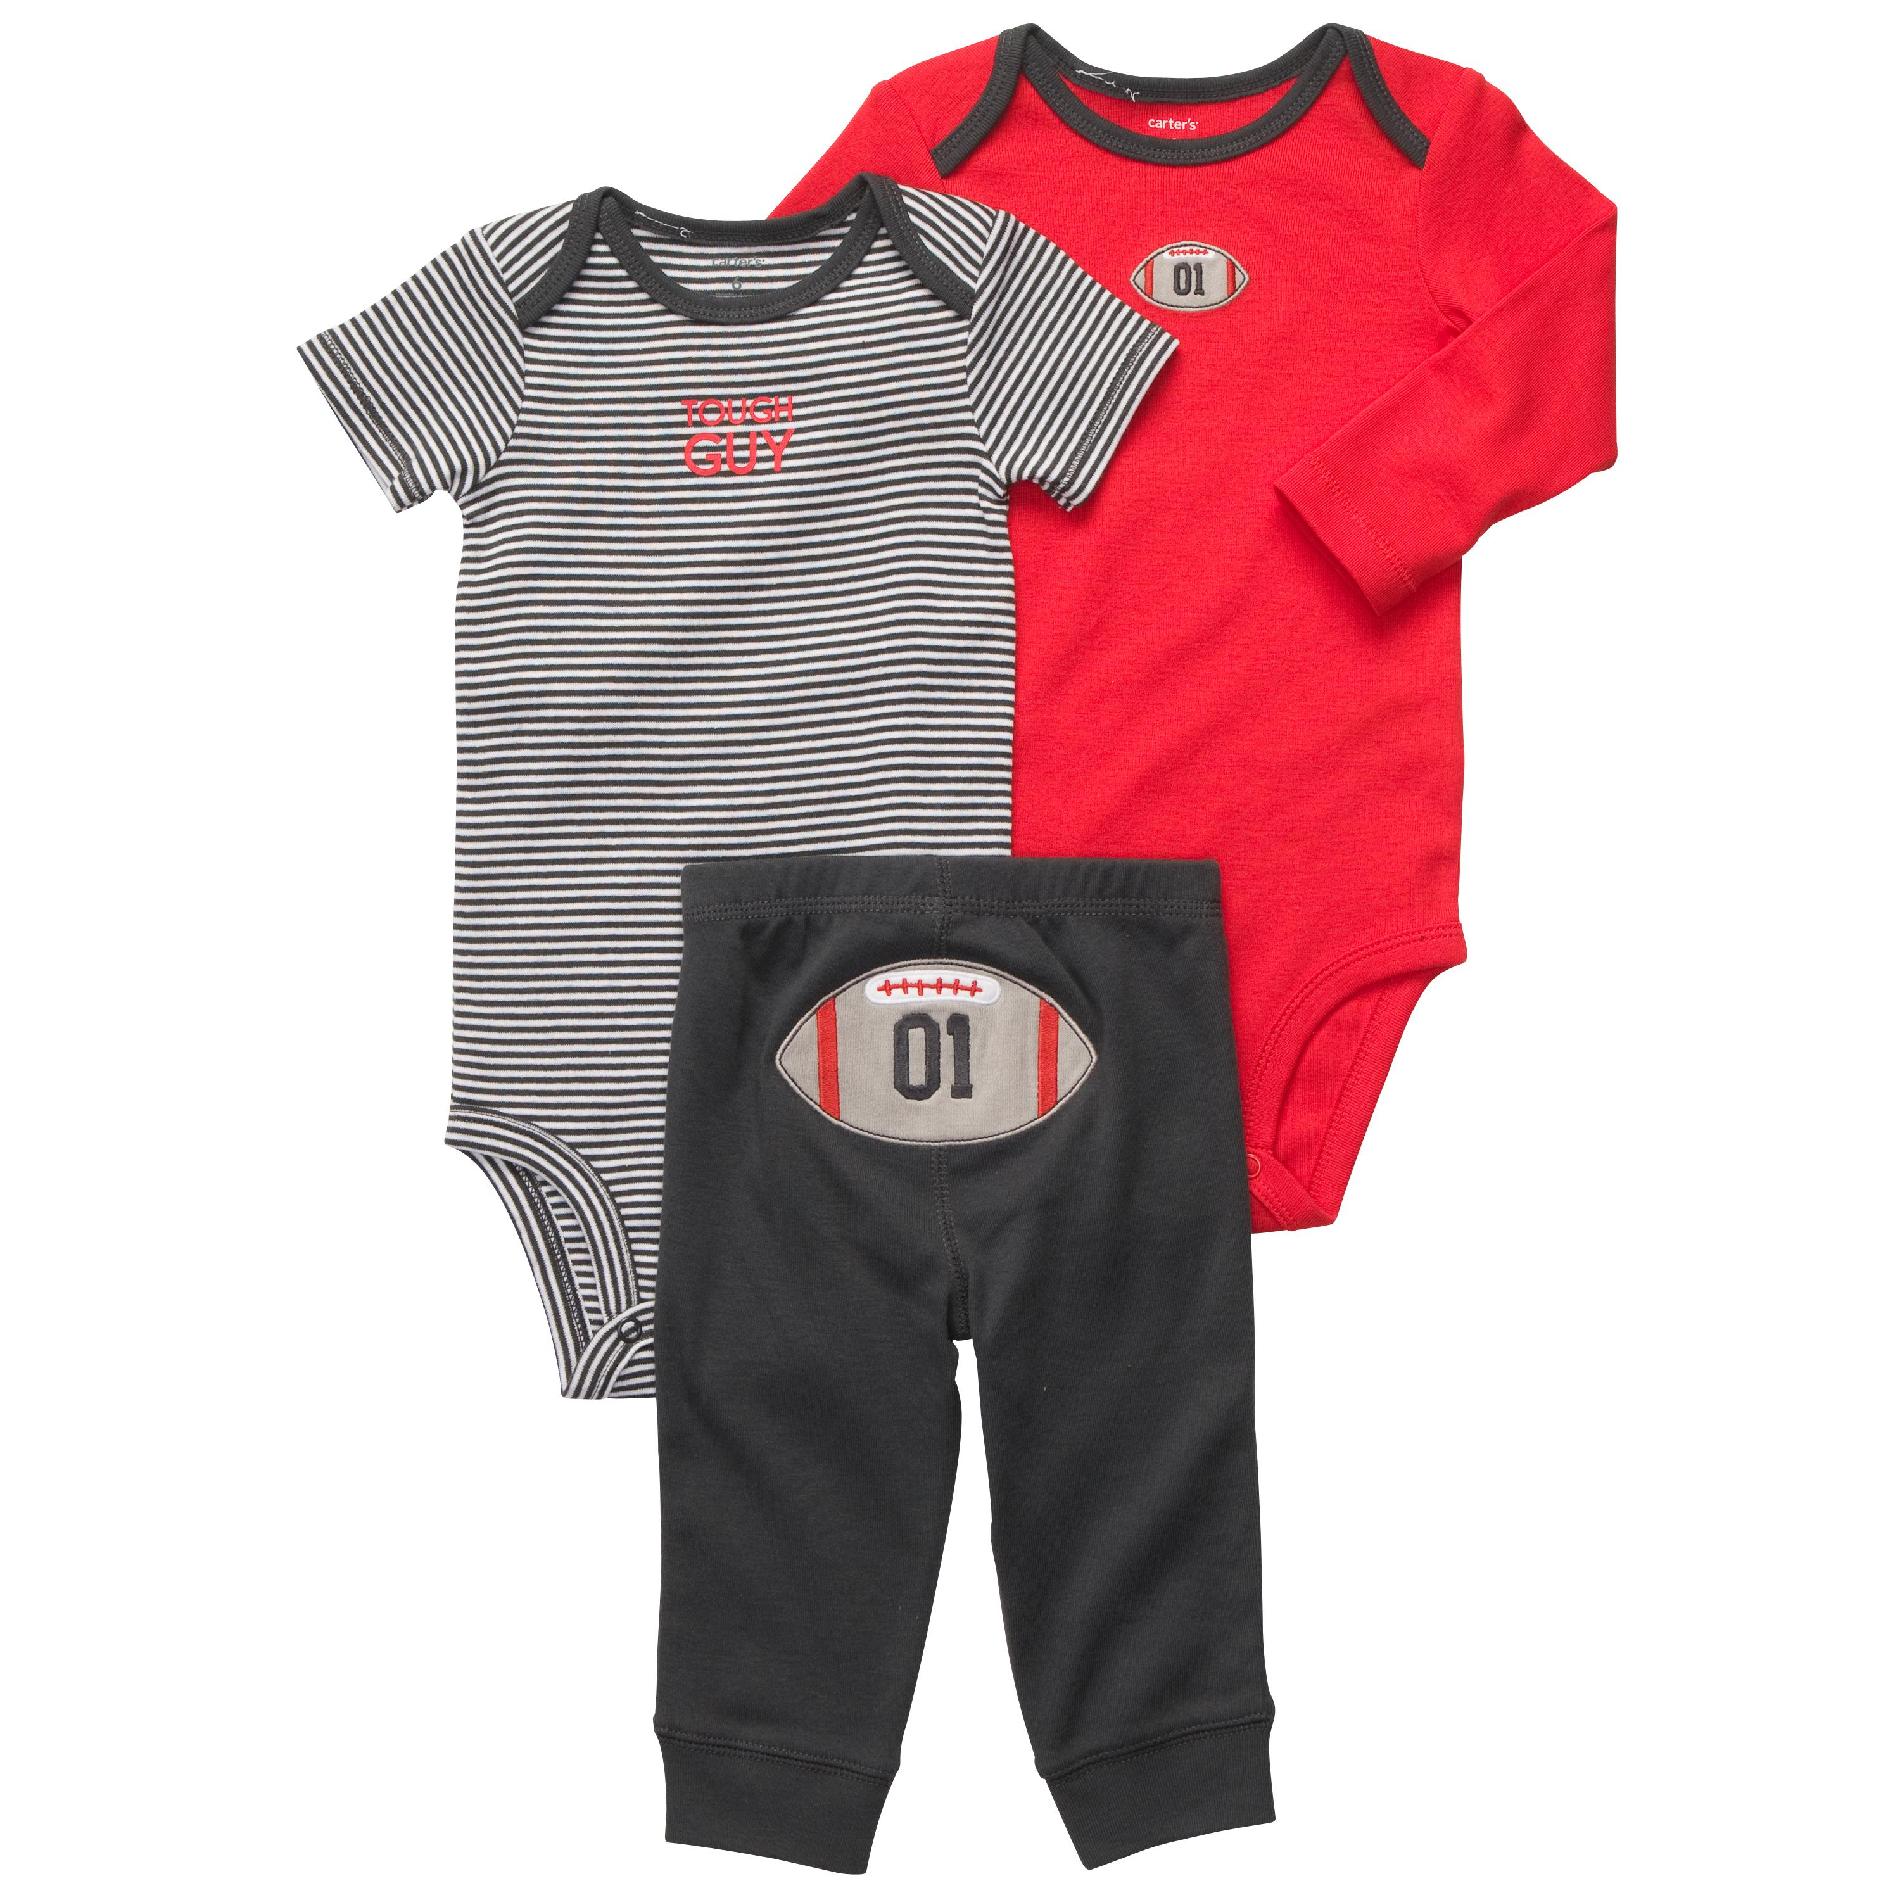 Carter's Newborn & Infant Boy's 3Pc Bodysuits & Pants - Football